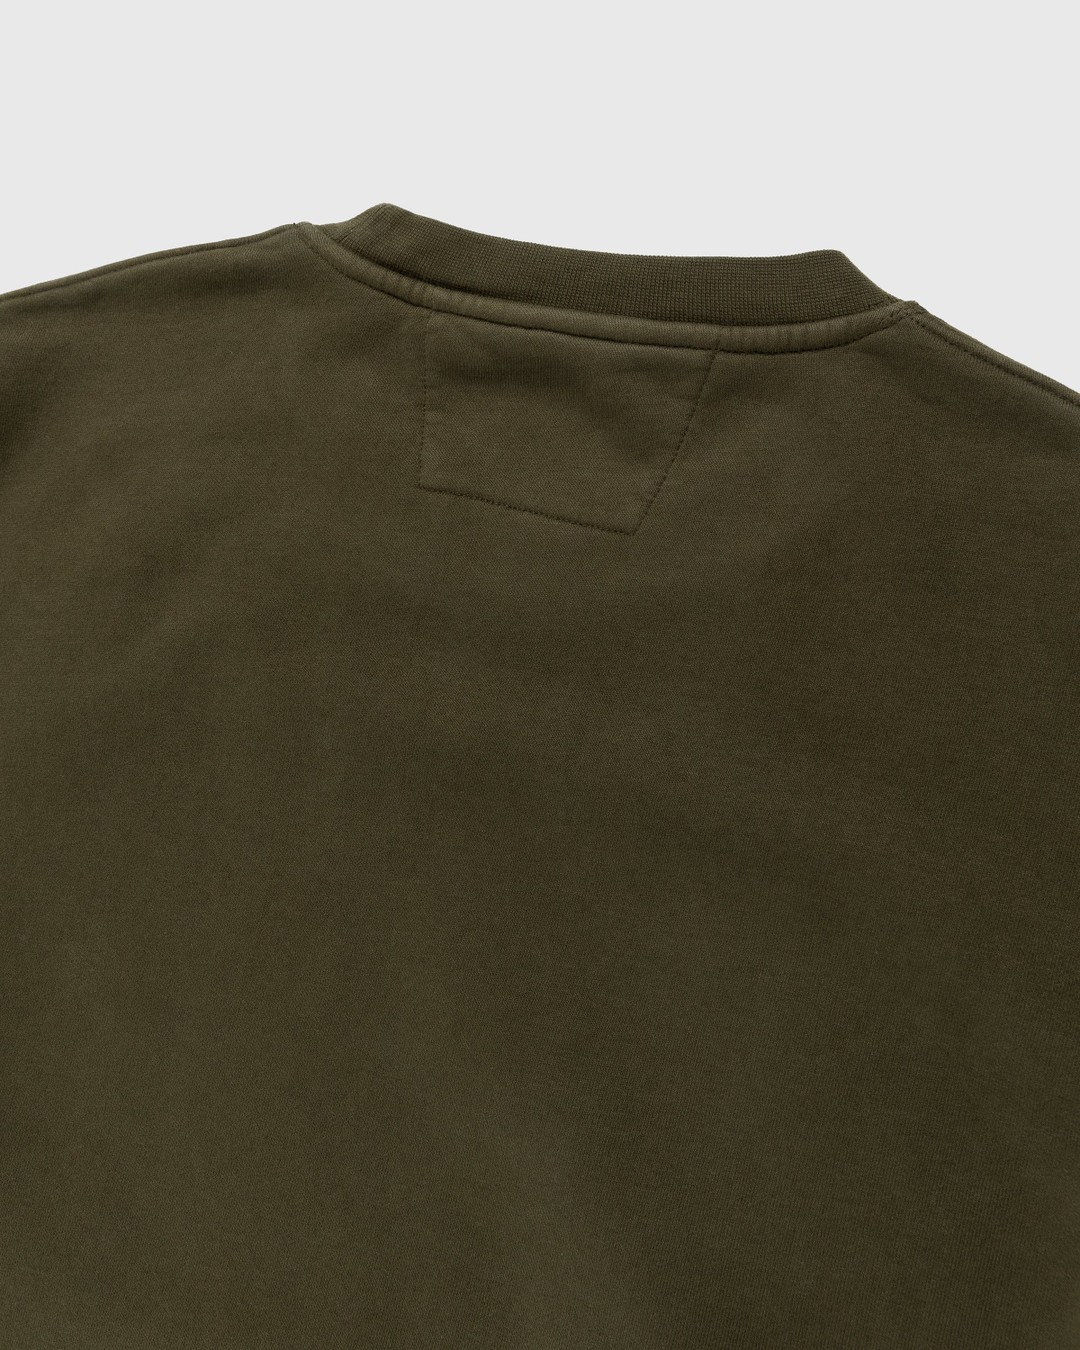 C.P. Company – Diagonal Raised Fleece Crewneck Sweatshirt Ivy Green - Sweats - Green - Image 3